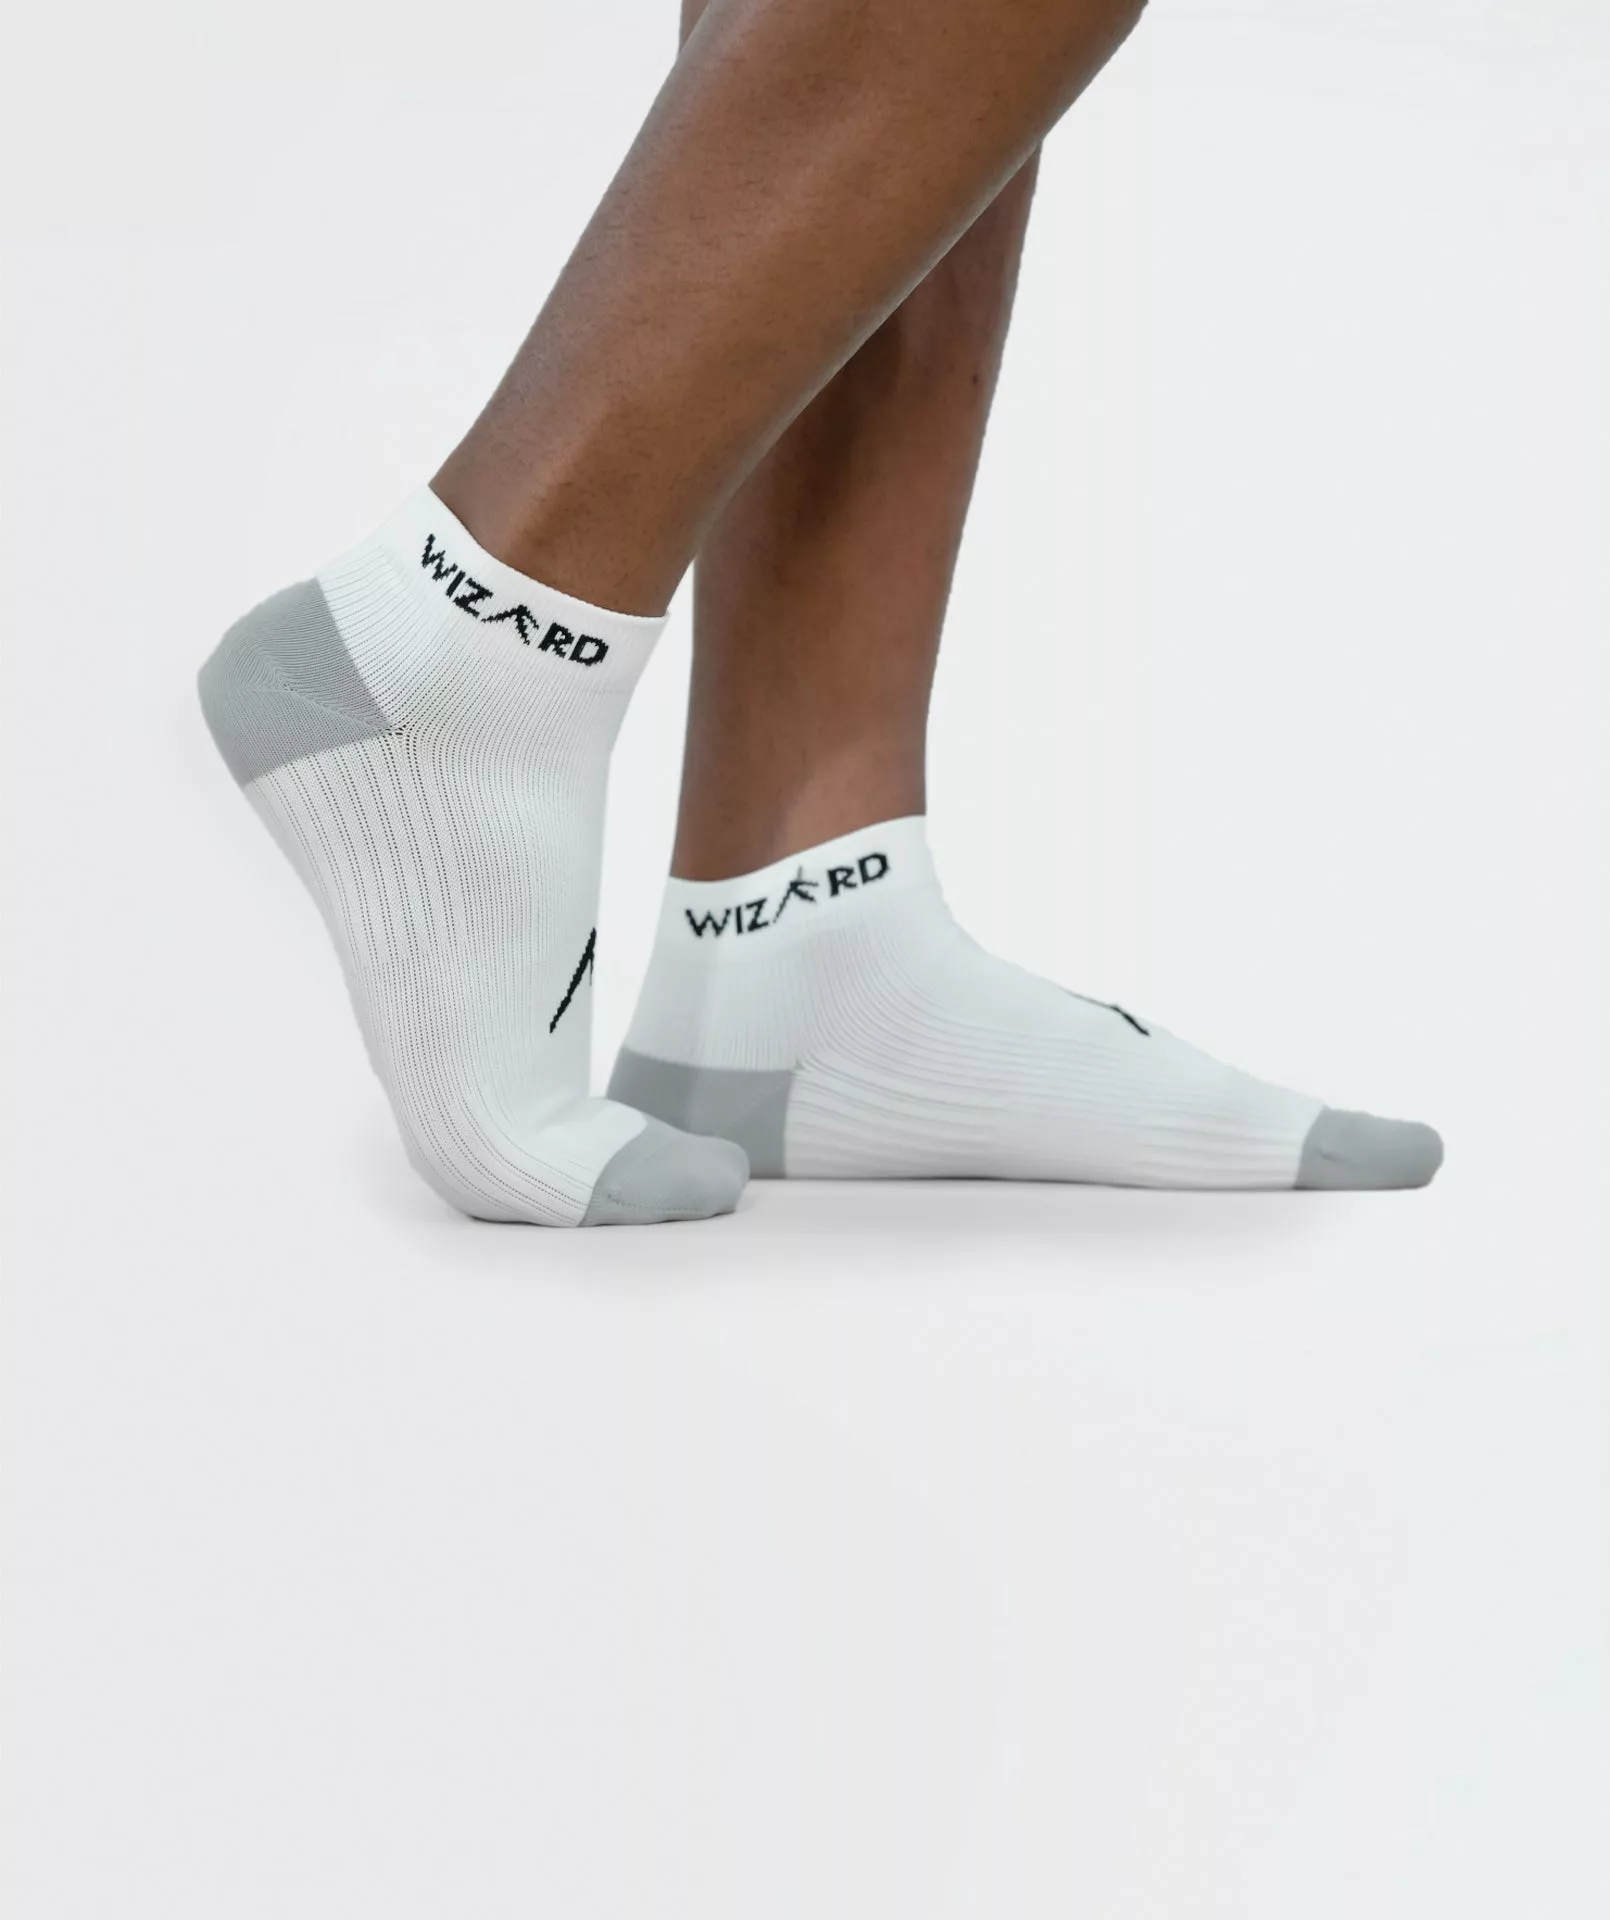 Unisex Ankle Polyester Socks - Pack of 3 White Image 1